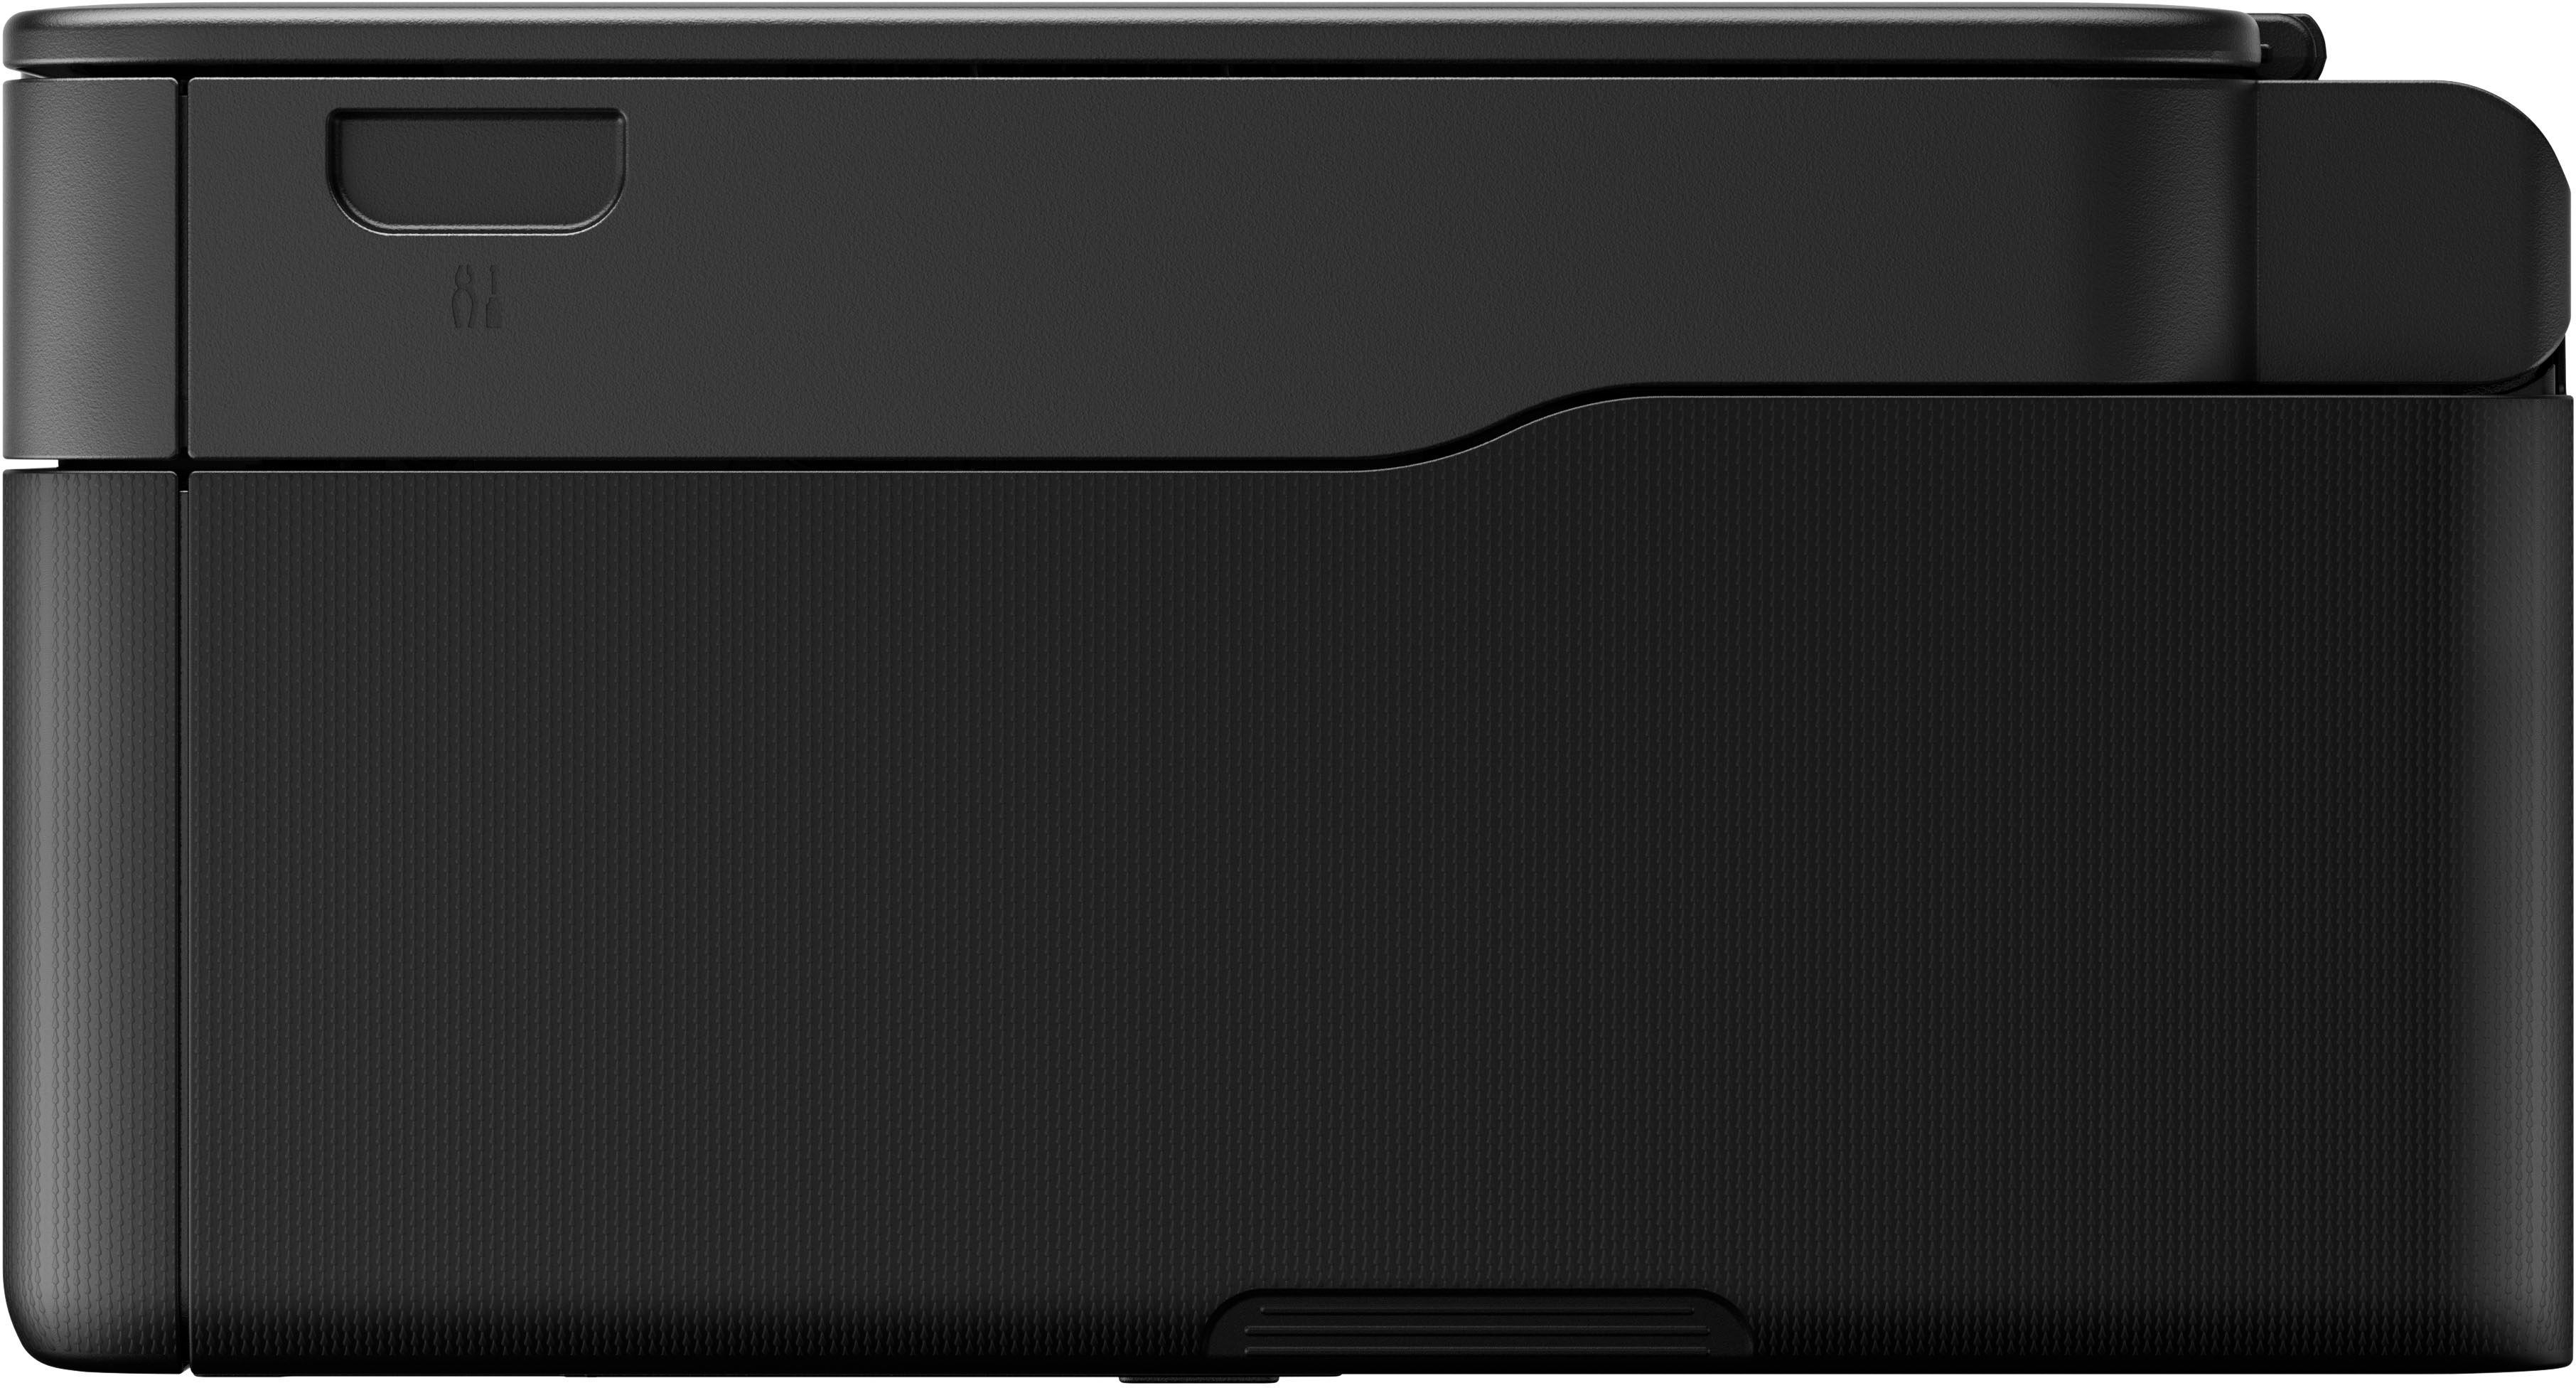 Canon Pixma G3270 Wireless MegaTank All-In-One Printer Review